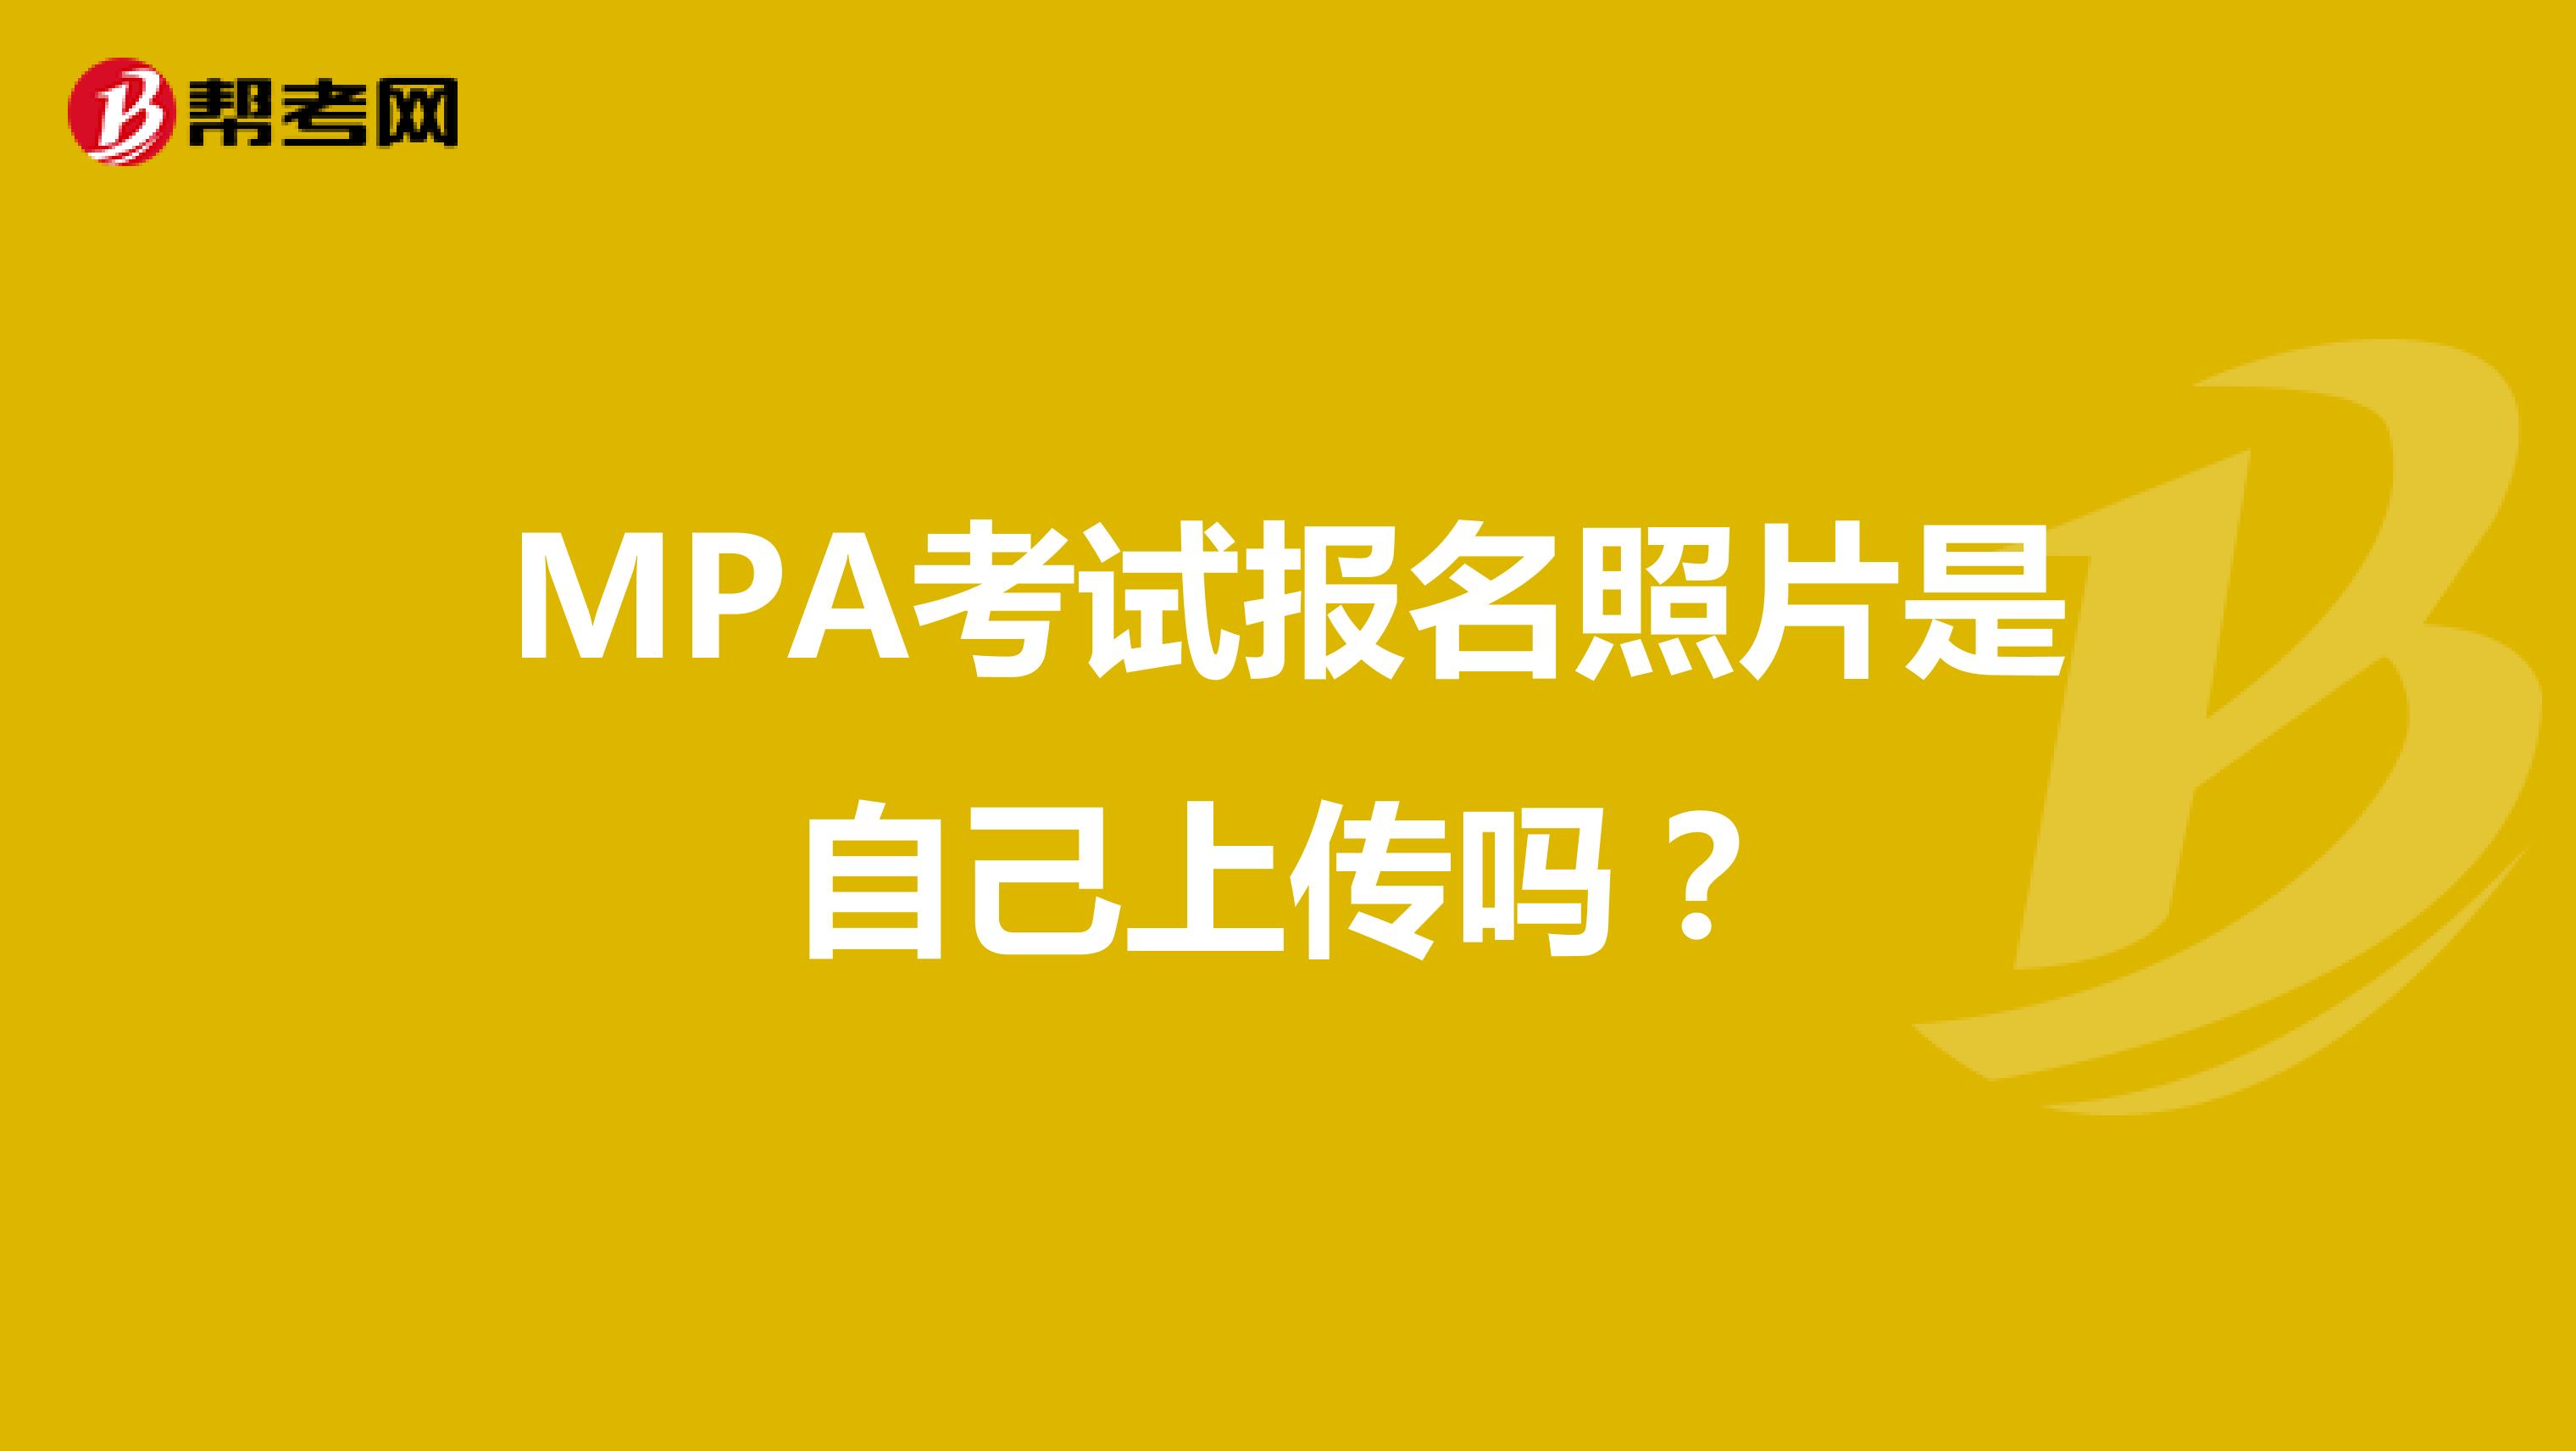 MPA考试报名照片是自己上传吗？